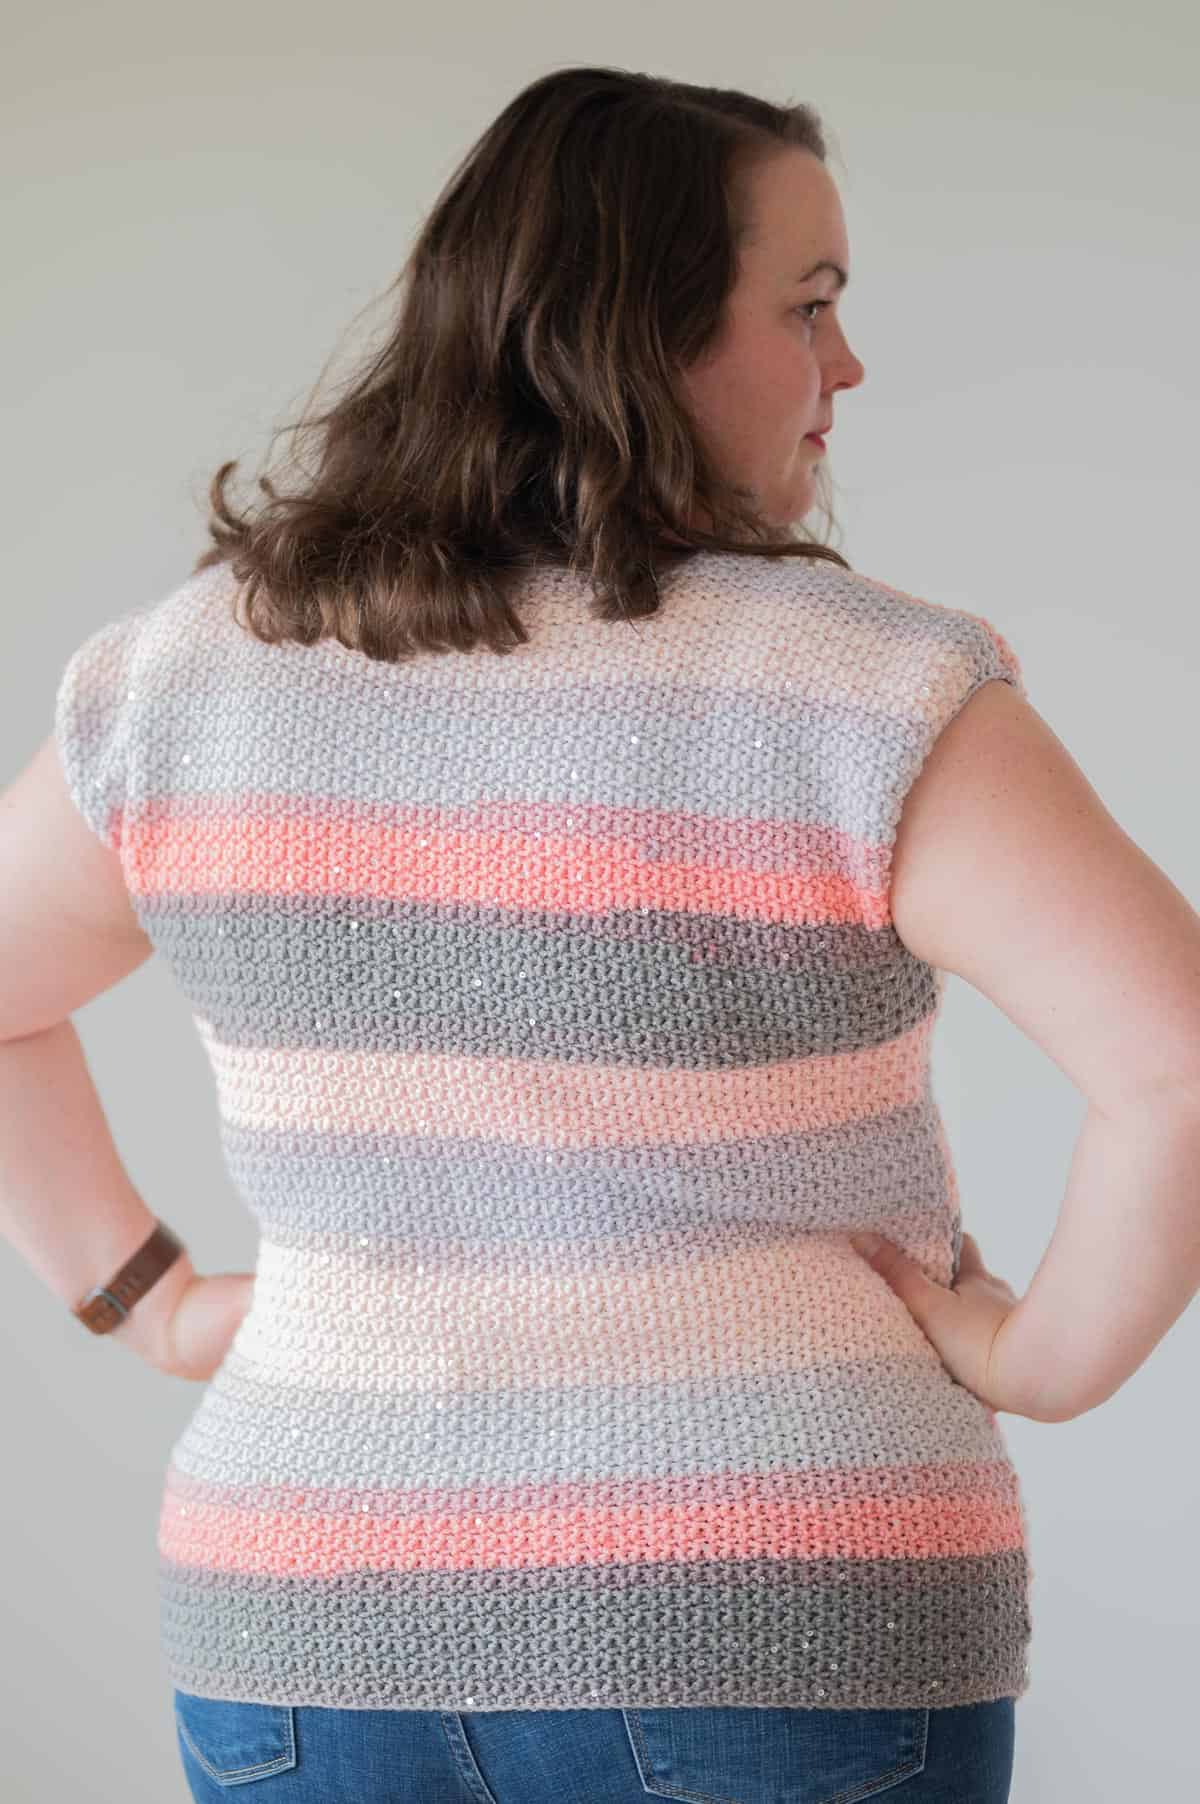 Tie Front Top Crochet Pattern